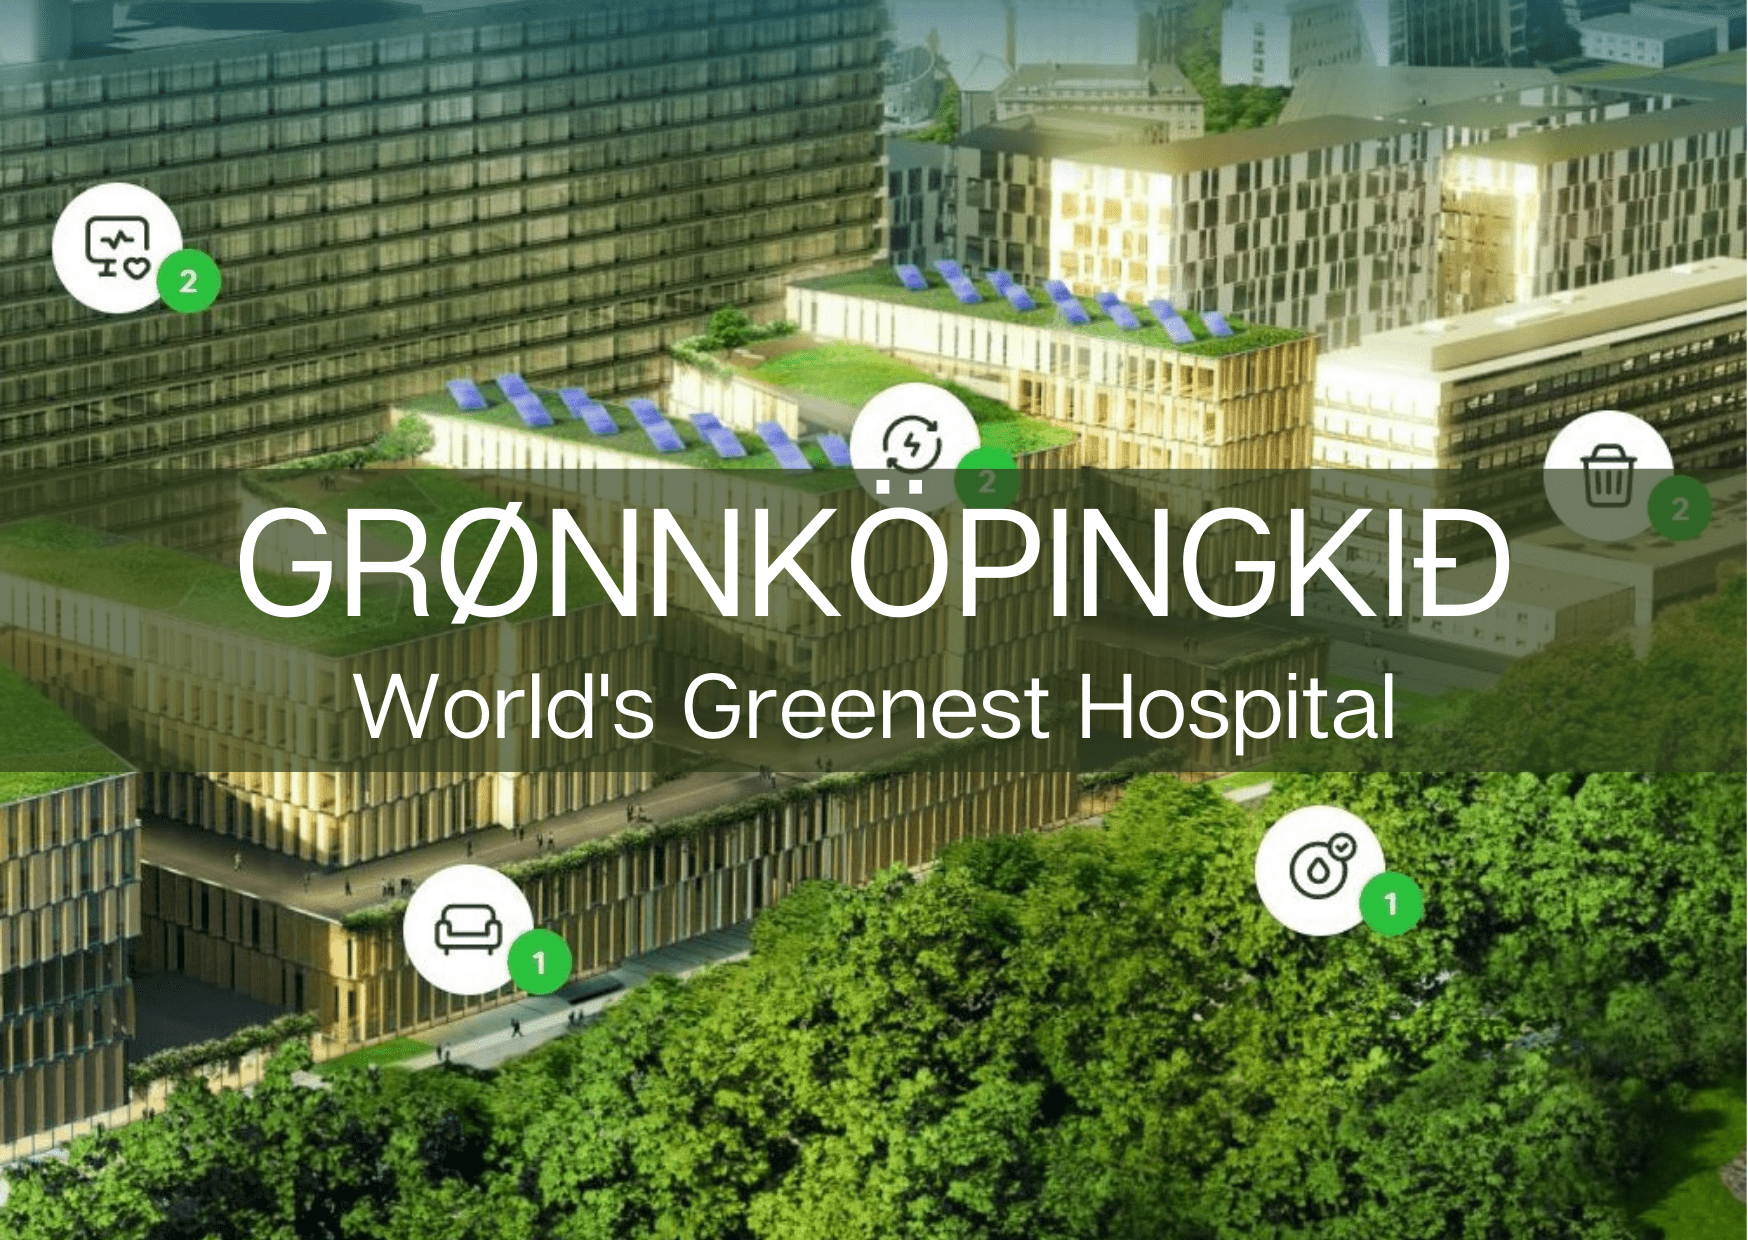 The world's greenest hospital